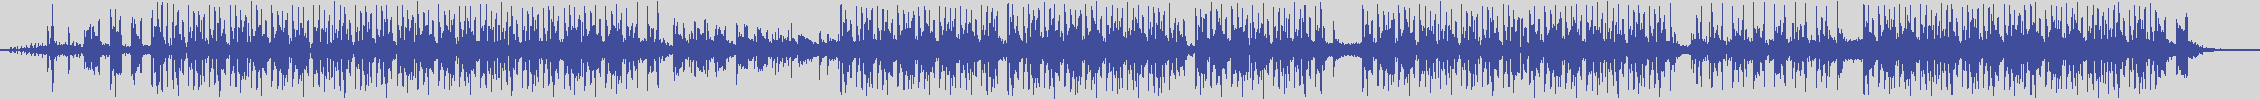 noclouds_chillout [NOC133] The Chiller - Chiller [Original Mix] audio wave form